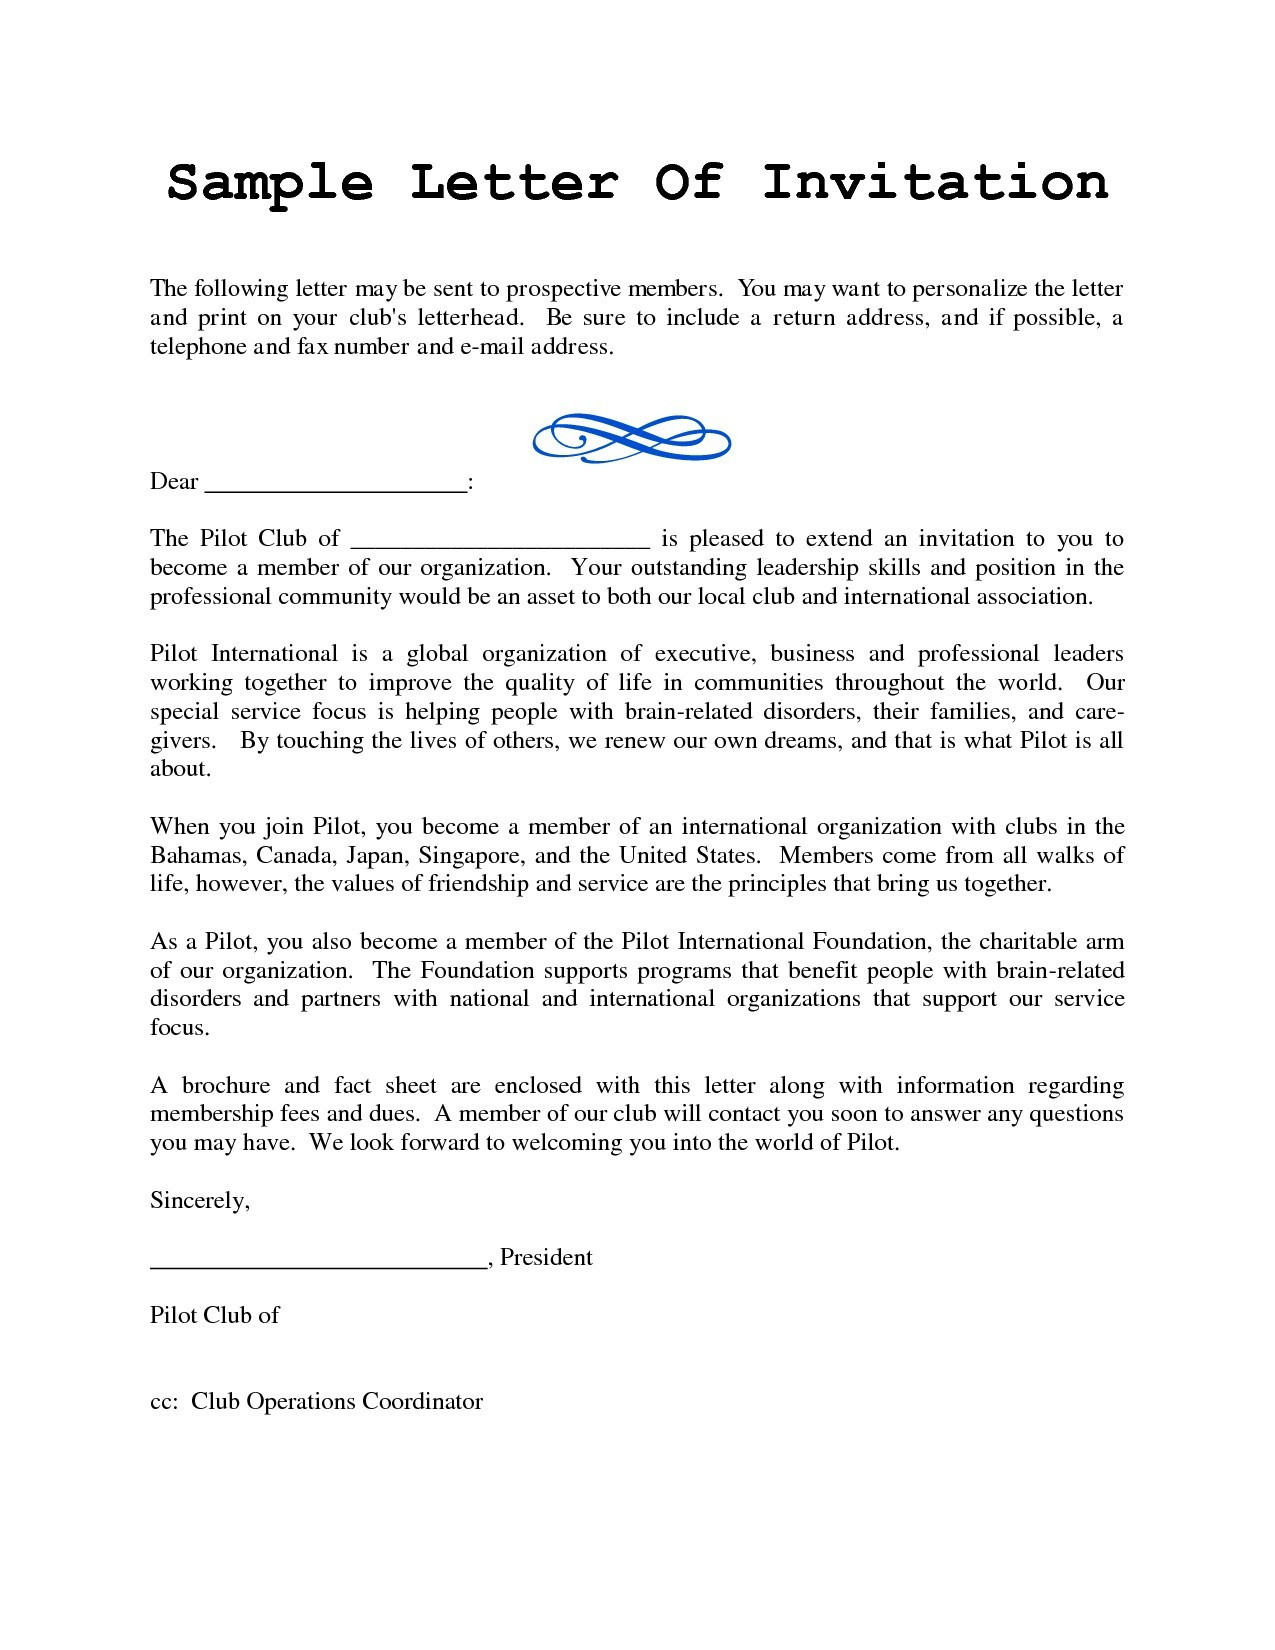 Sample Of Formal Invitation Letter For A Seminar With Seminar Invitation Card Template